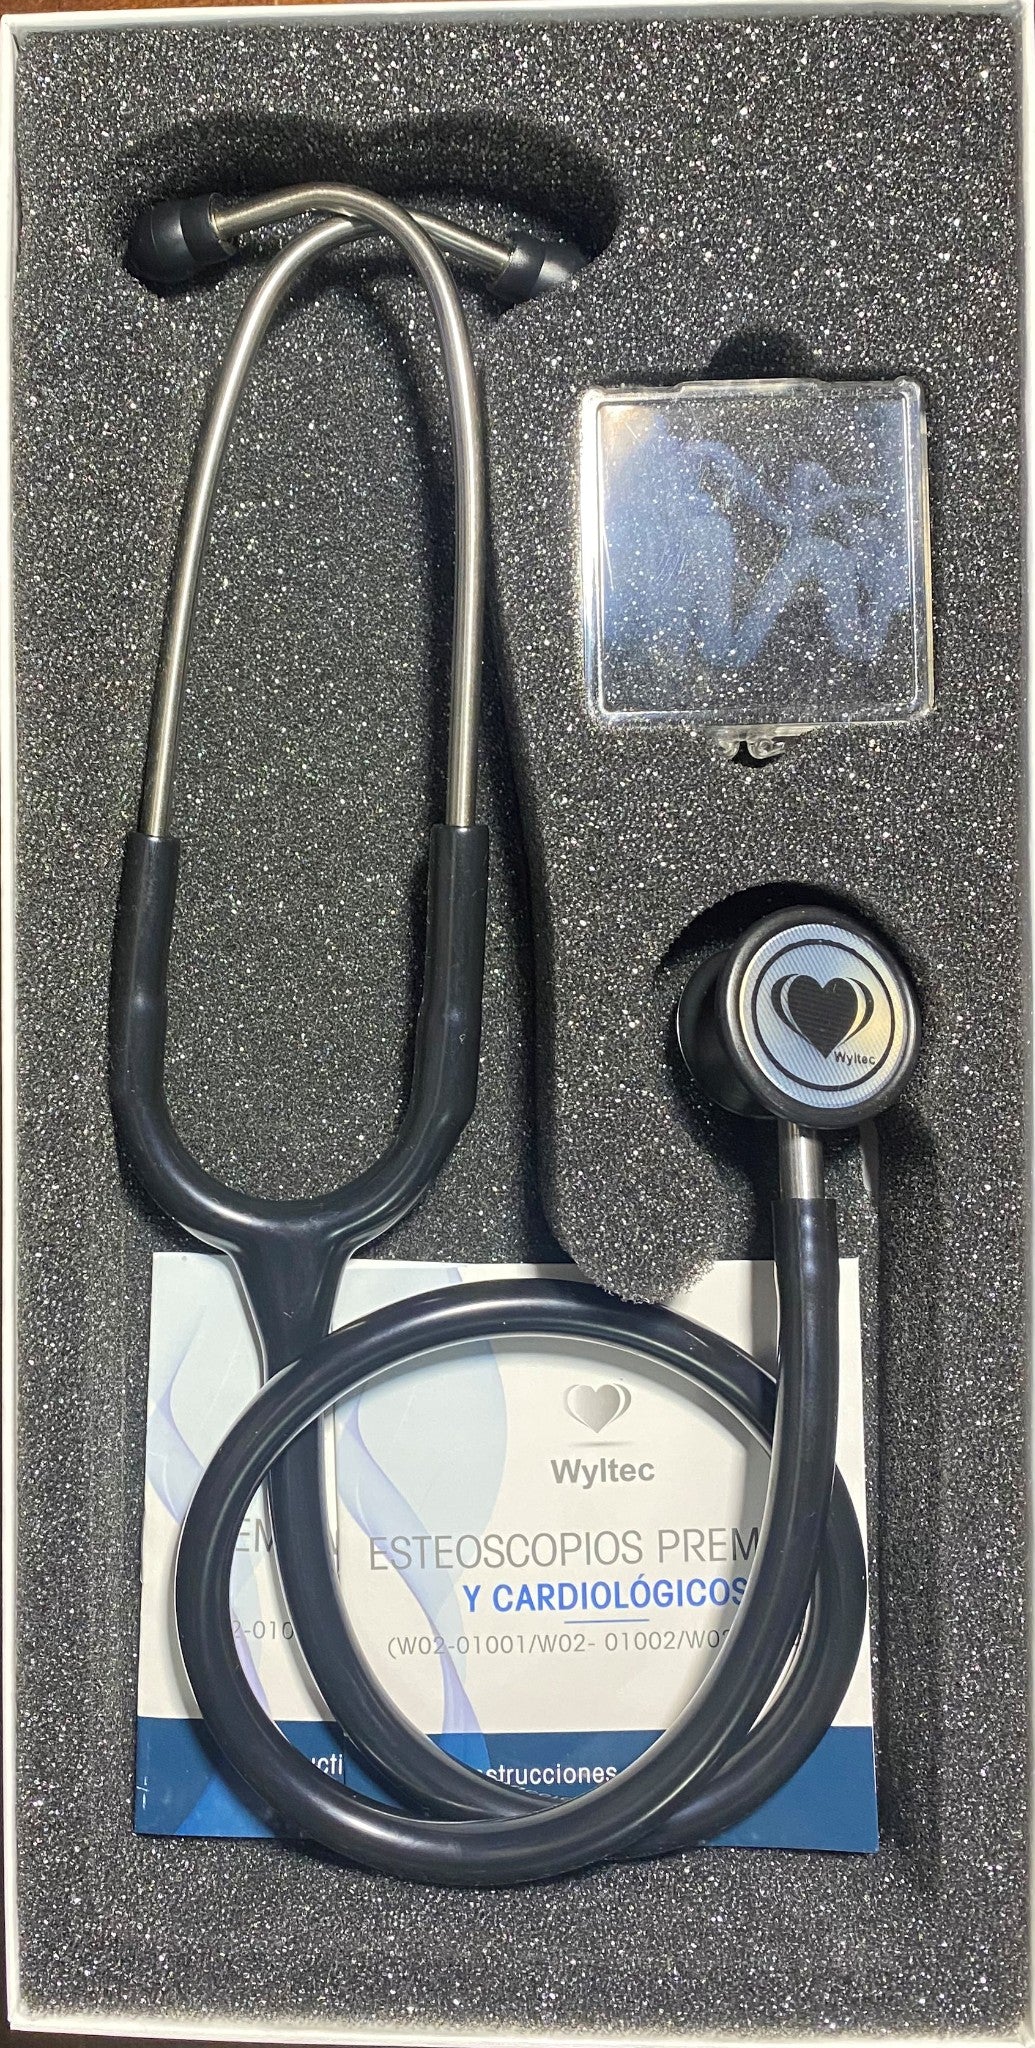 Wyltec W02-01002 Premium Stainless Steel Dual Head Pediatric Stethoscope (Black)